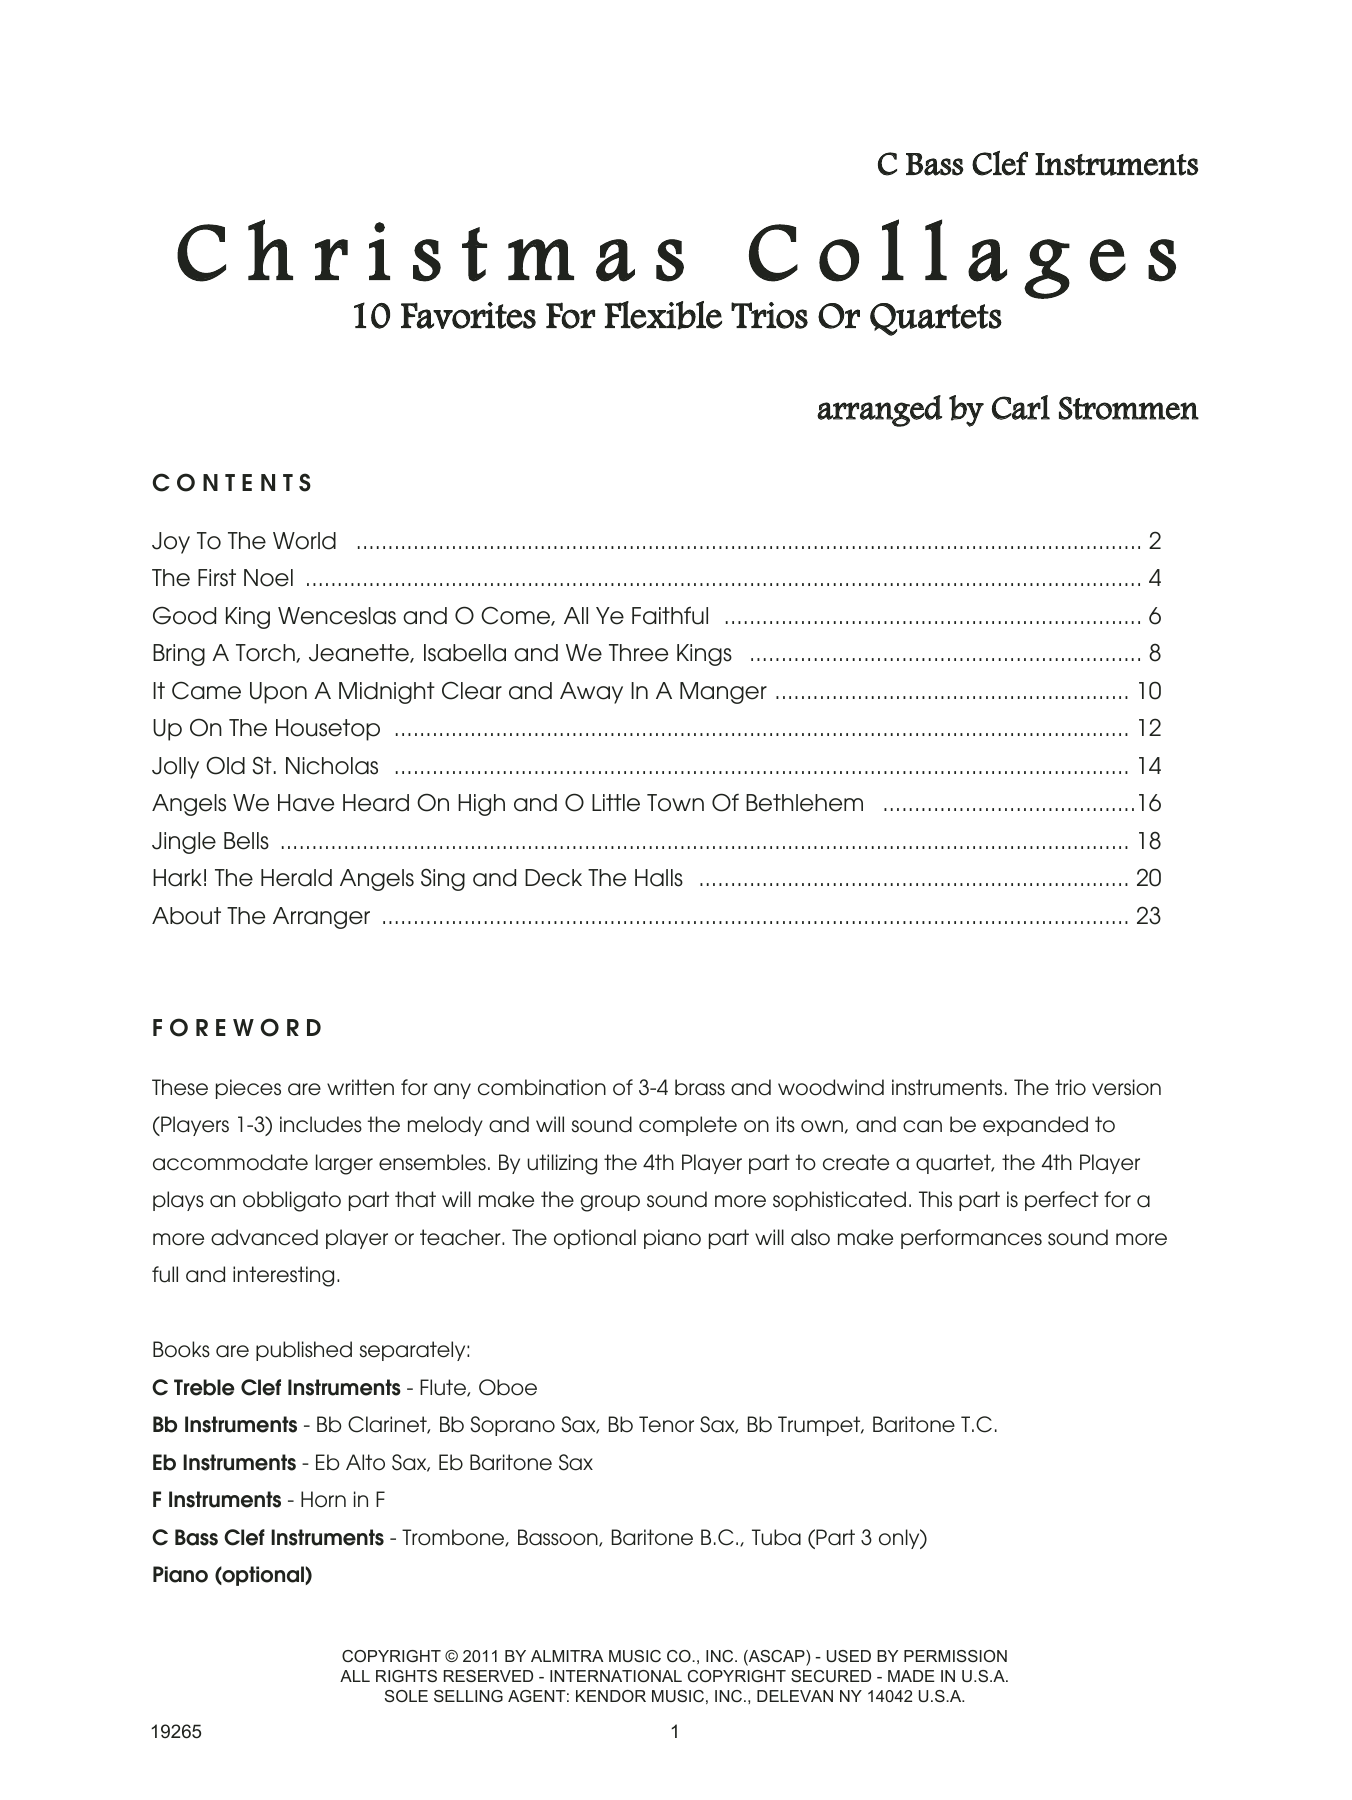 Download Strommen Christmas Collages - C Bass Clef Instru Sheet Music